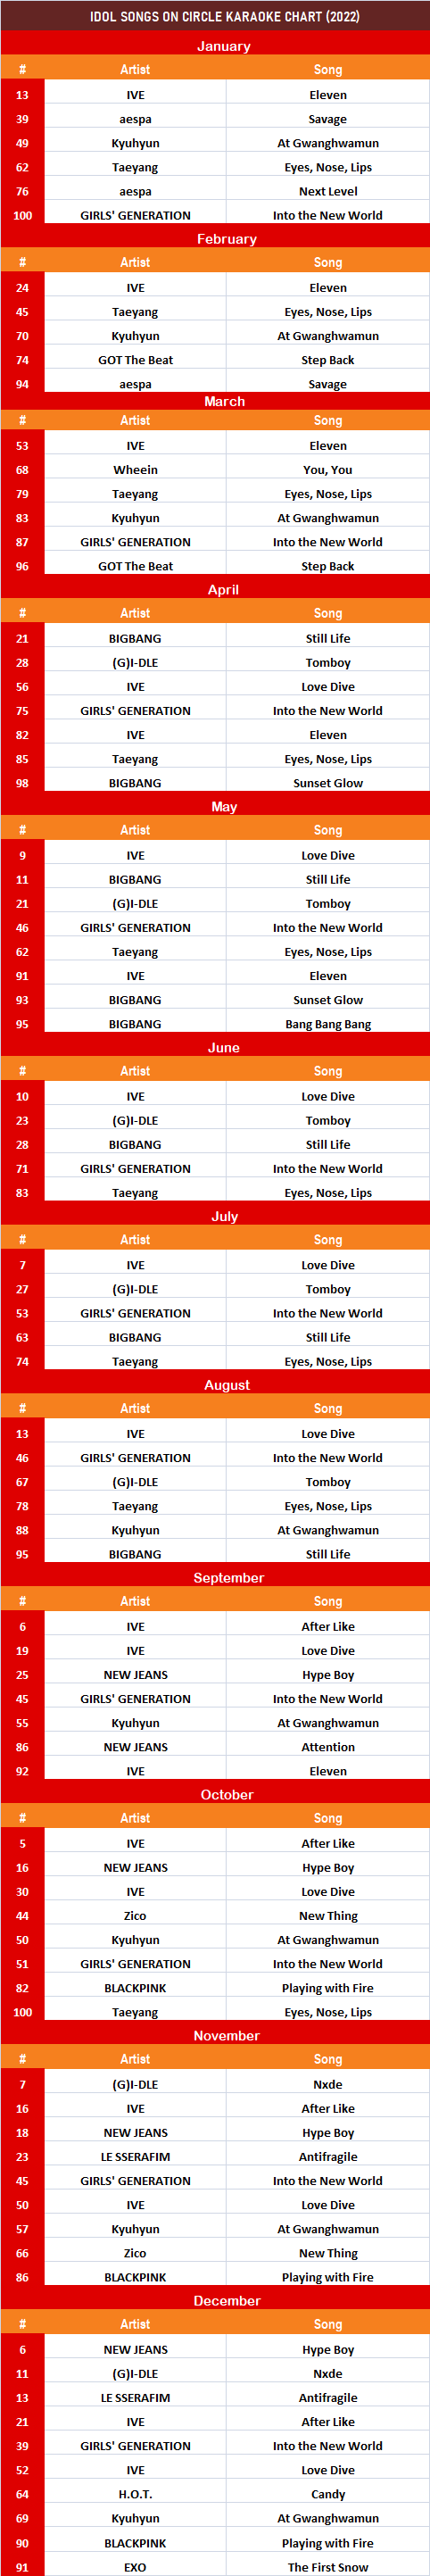 Most Sung Idol Songs nationwide in 2022 on Circle (GAON) Karaoke Chart